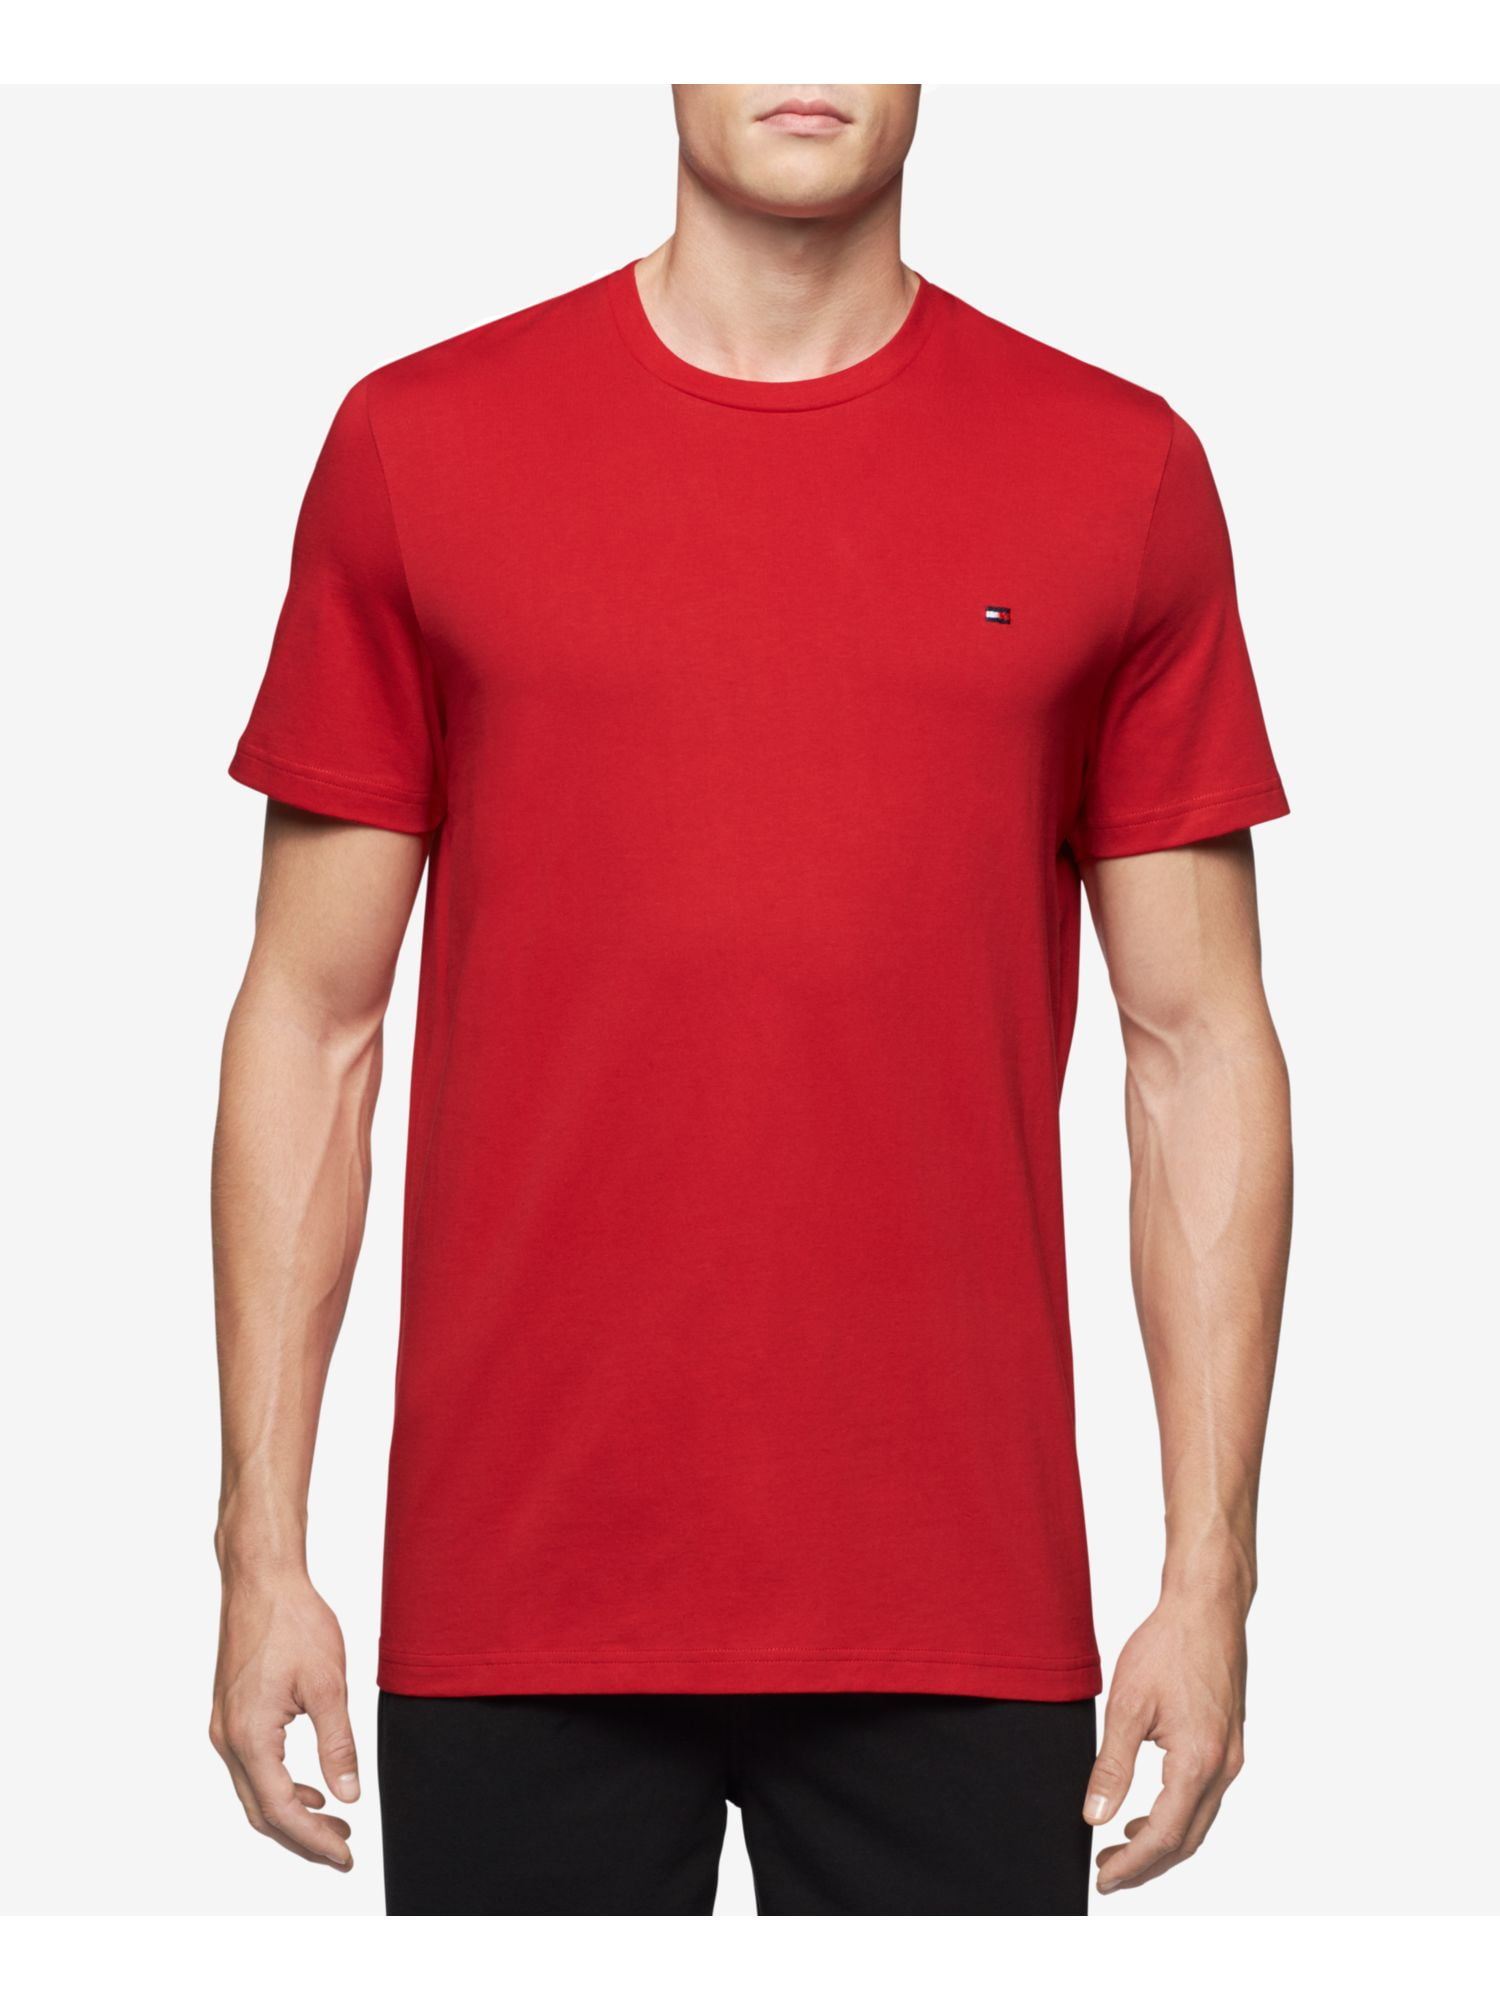 TOMMY HILFIGER Mens Red Lightweight, Classic Fit T-Shirt M